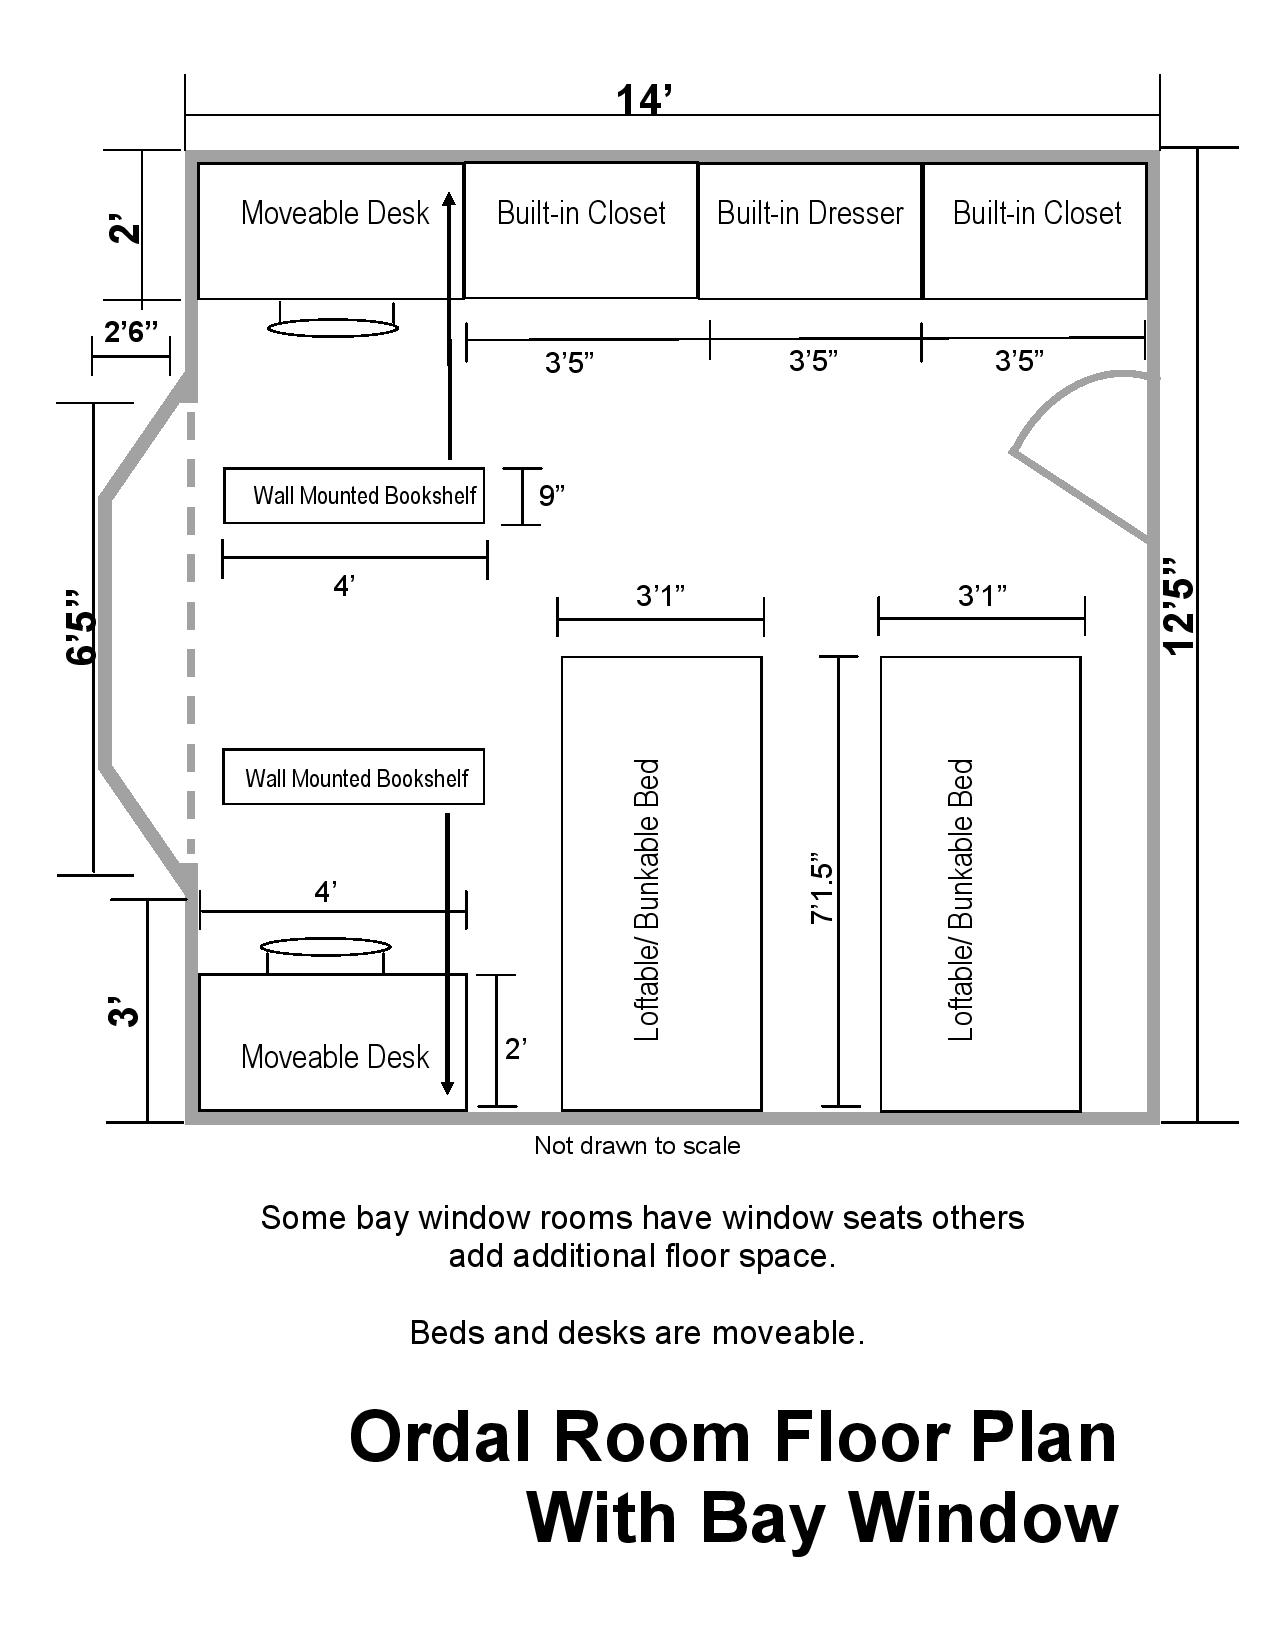 Ordal Hall Floor Plans Residential Life Plu